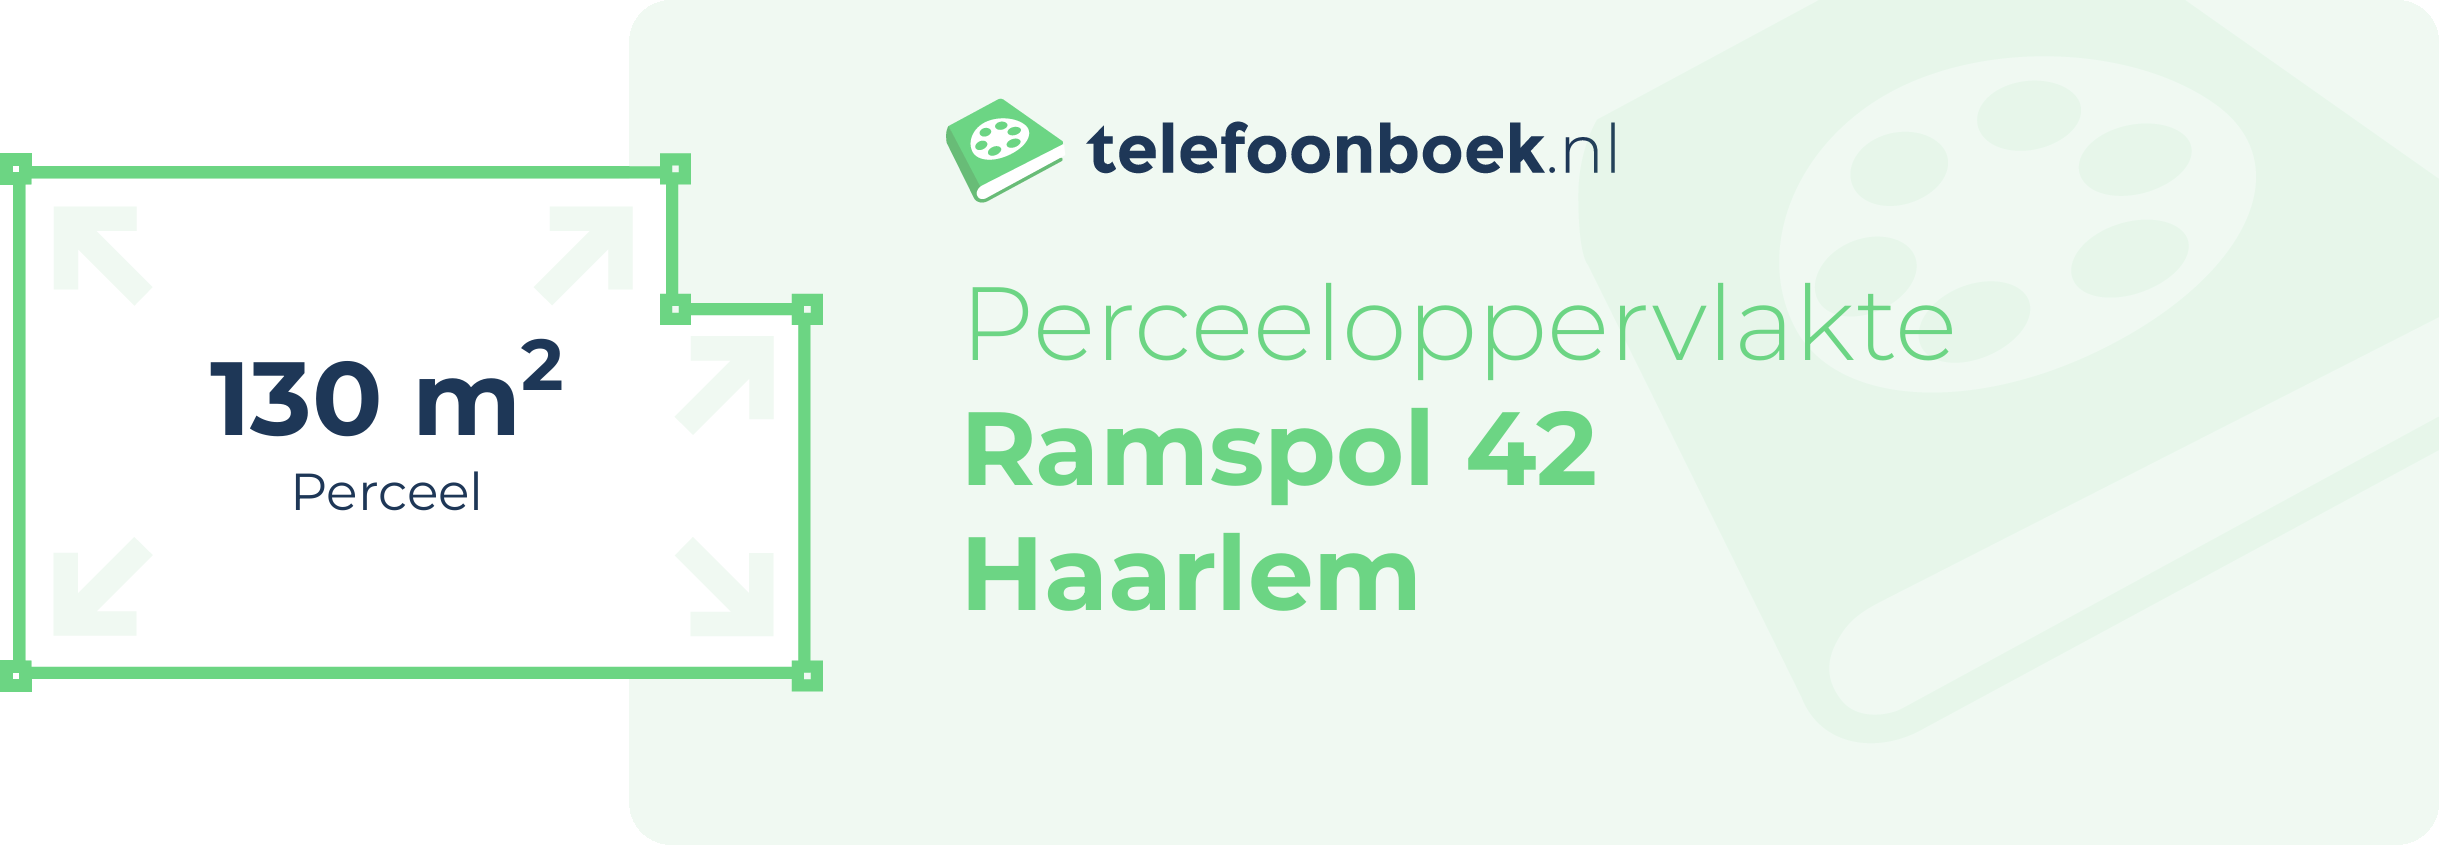 Perceeloppervlakte Ramspol 42 Haarlem